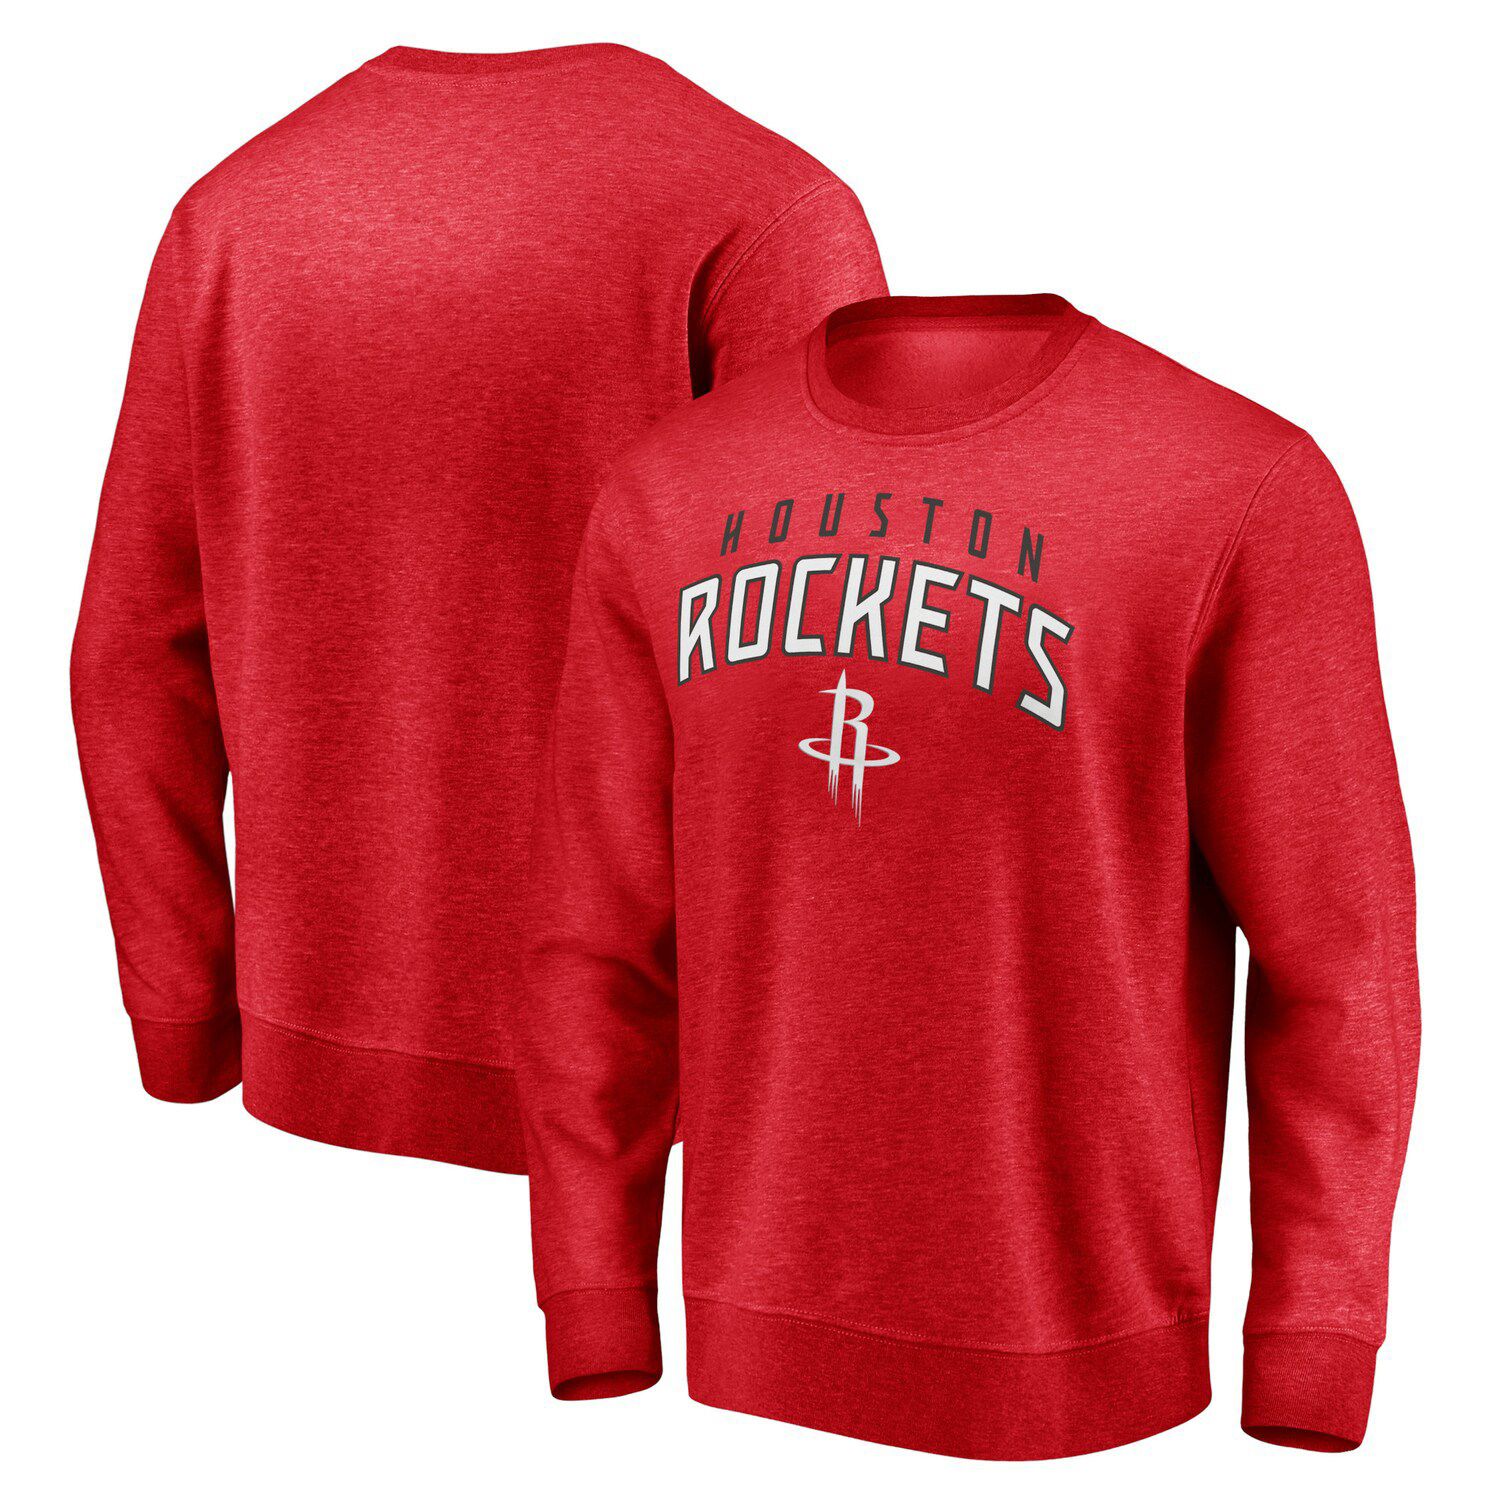 New Era Women's Houston Rockets Long Sleeve Crop Top Shirt